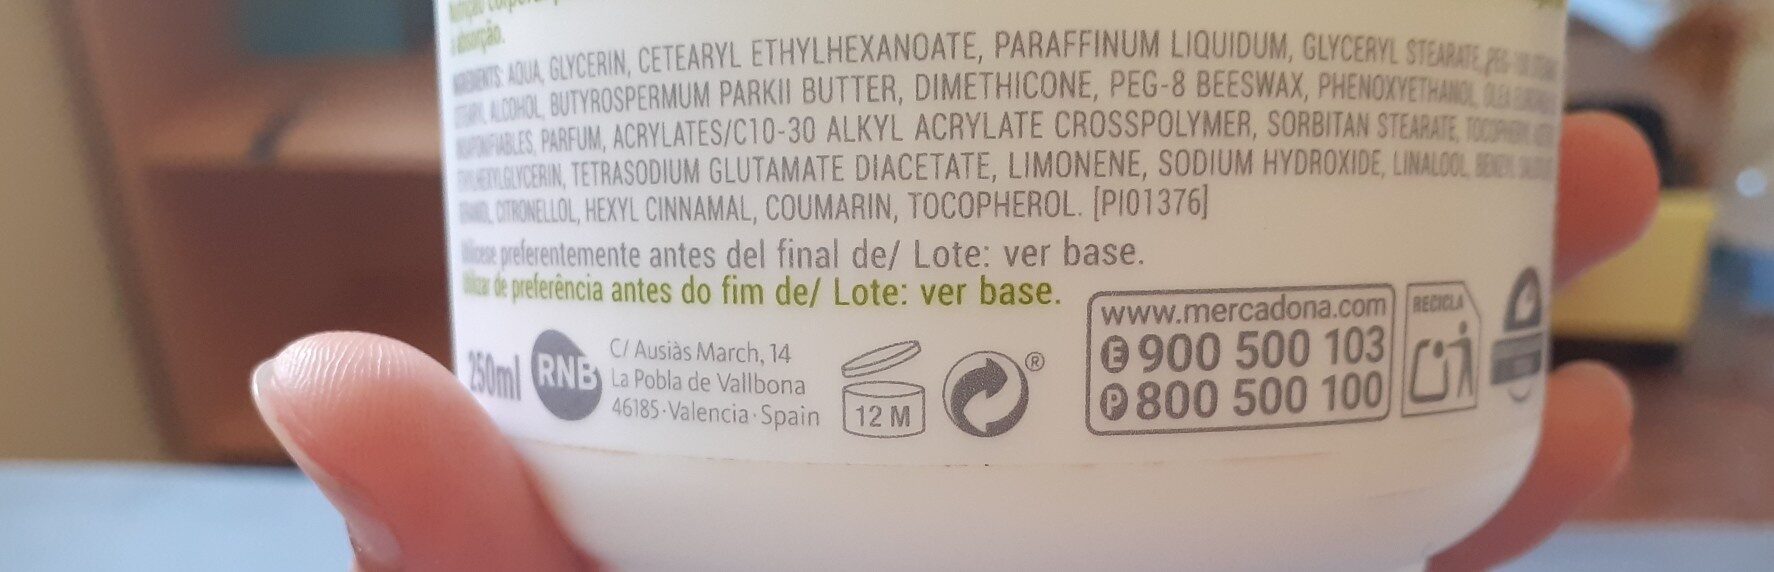 Cream with olive oil - Ingredientes - en